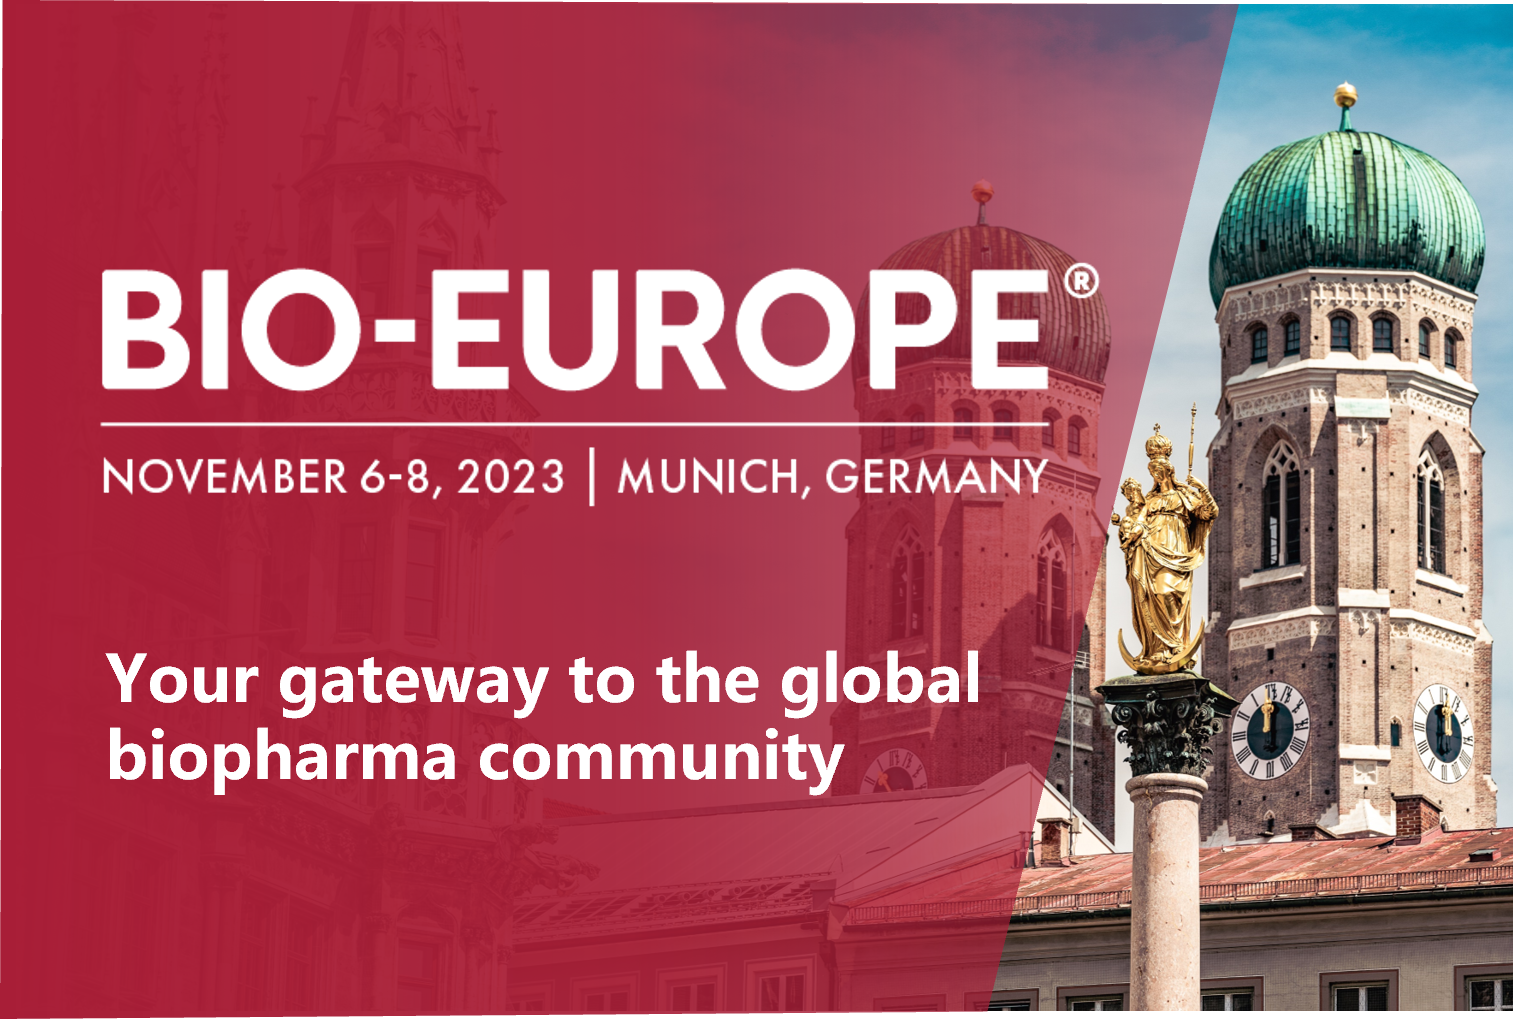 Kinnov Therapeutics will be present at the 29th annual BIO-Europe